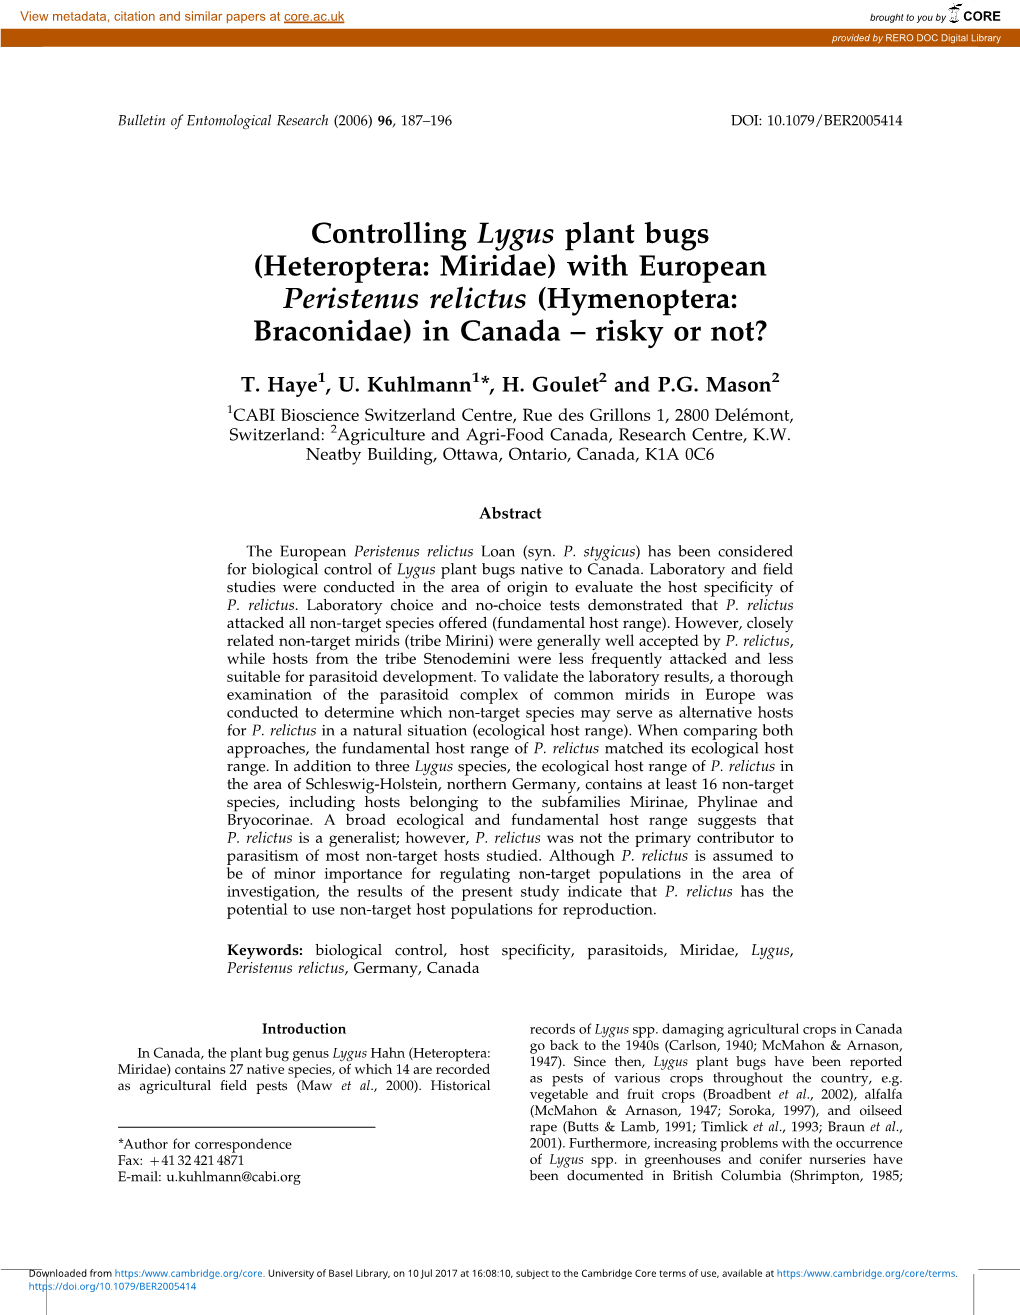 (Heteroptera: Miridae) with European Peristenus Relictus (Hymenoptera: Braconidae) in Canada – Risky Or Not?